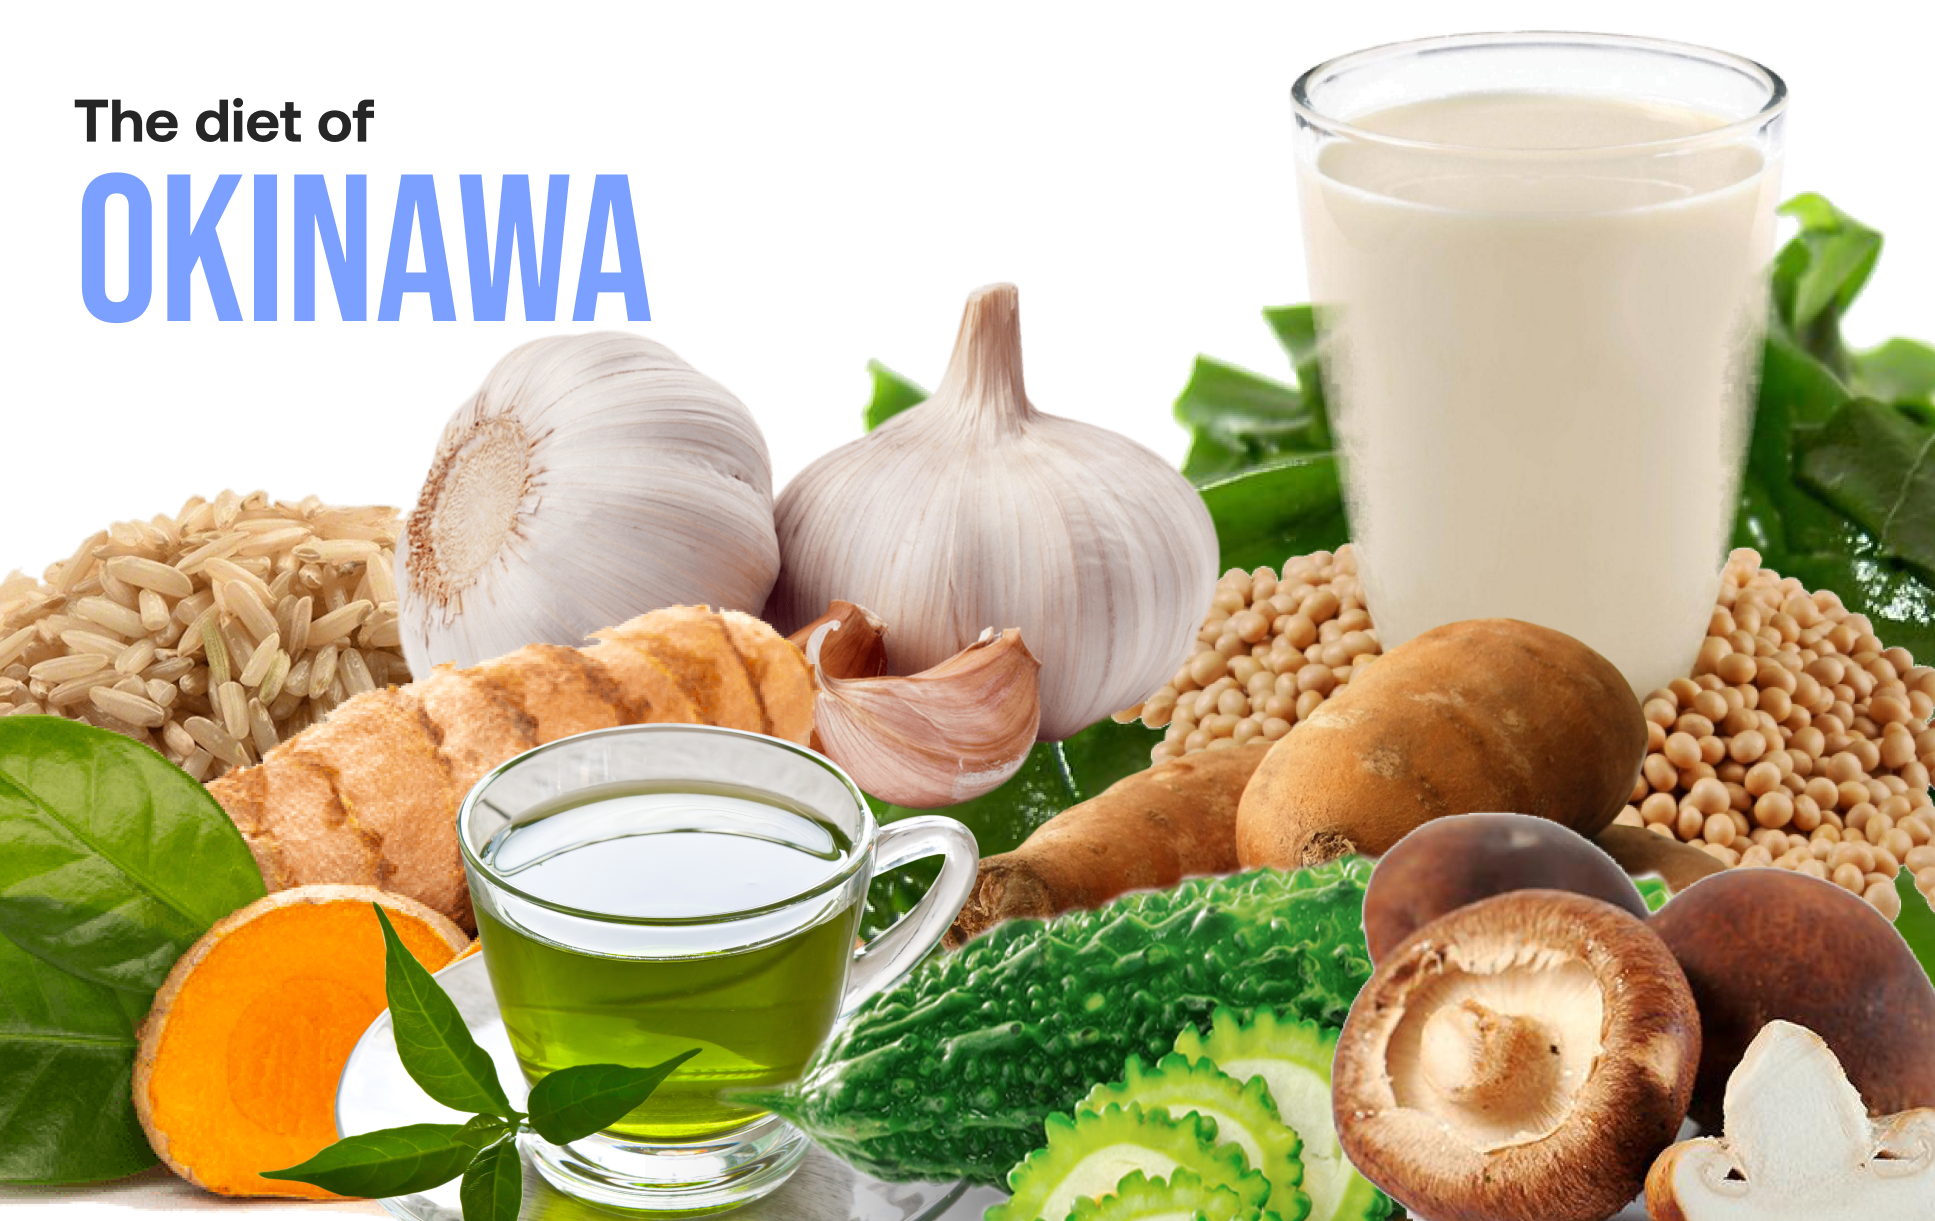 The diet of Okinawa